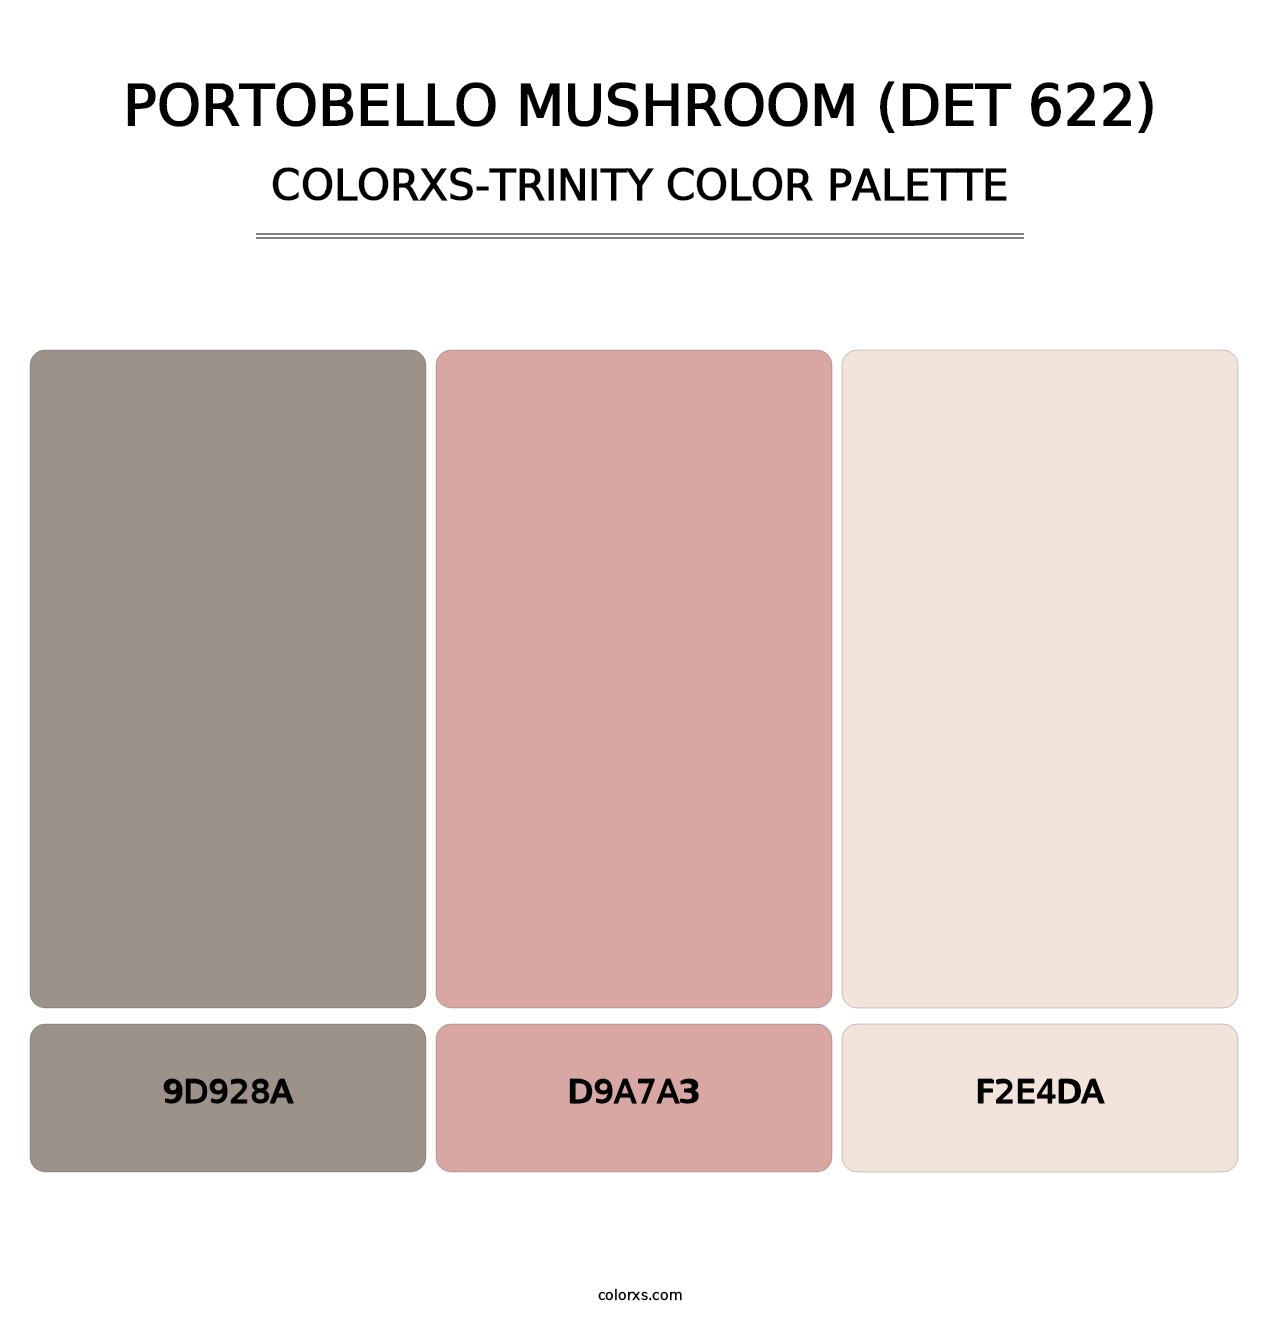 Portobello Mushroom (DET 622) - Colorxs Trinity Palette